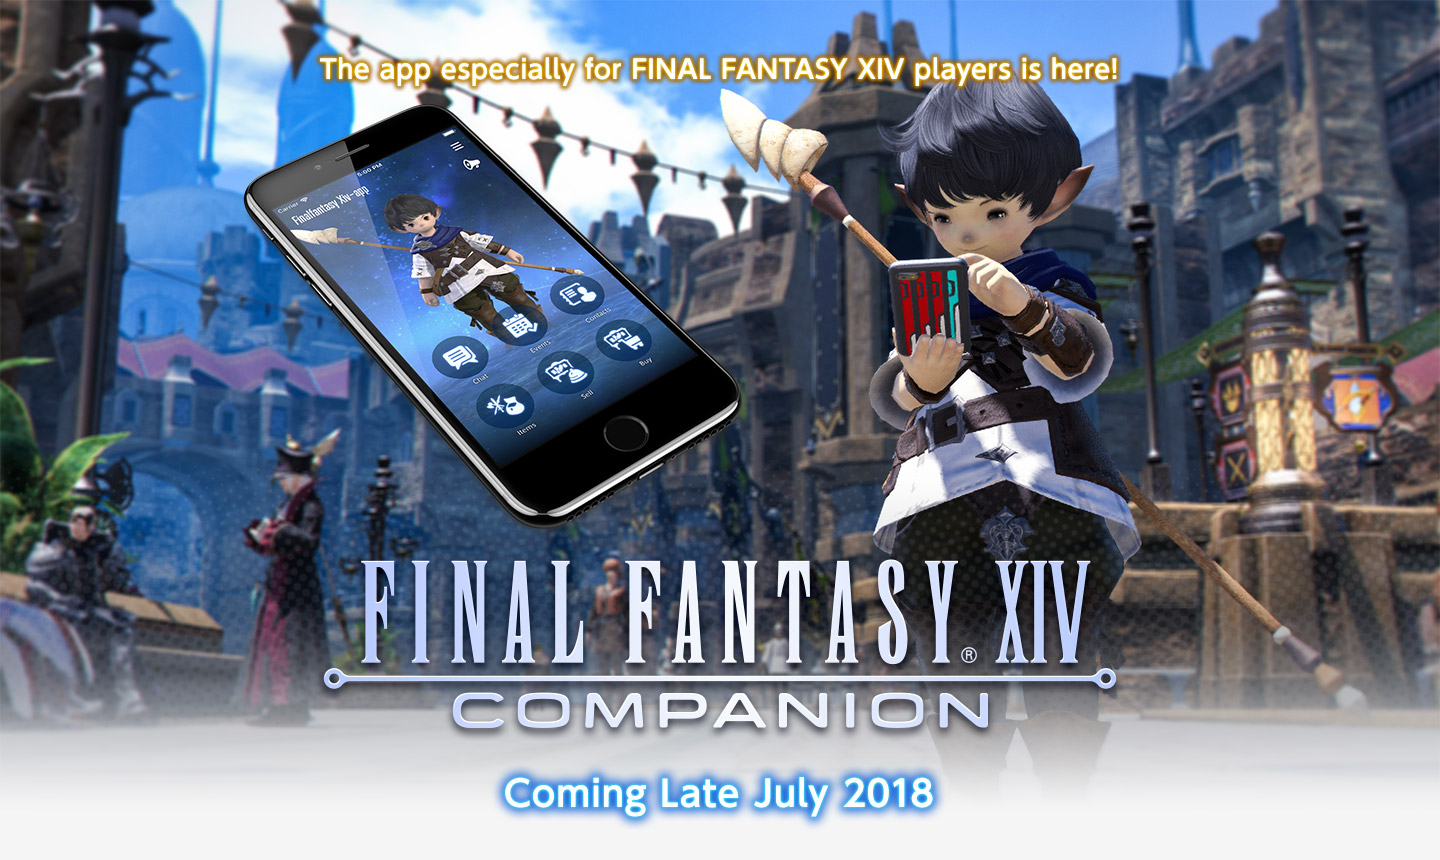 Final Fantasy XIV Companion App